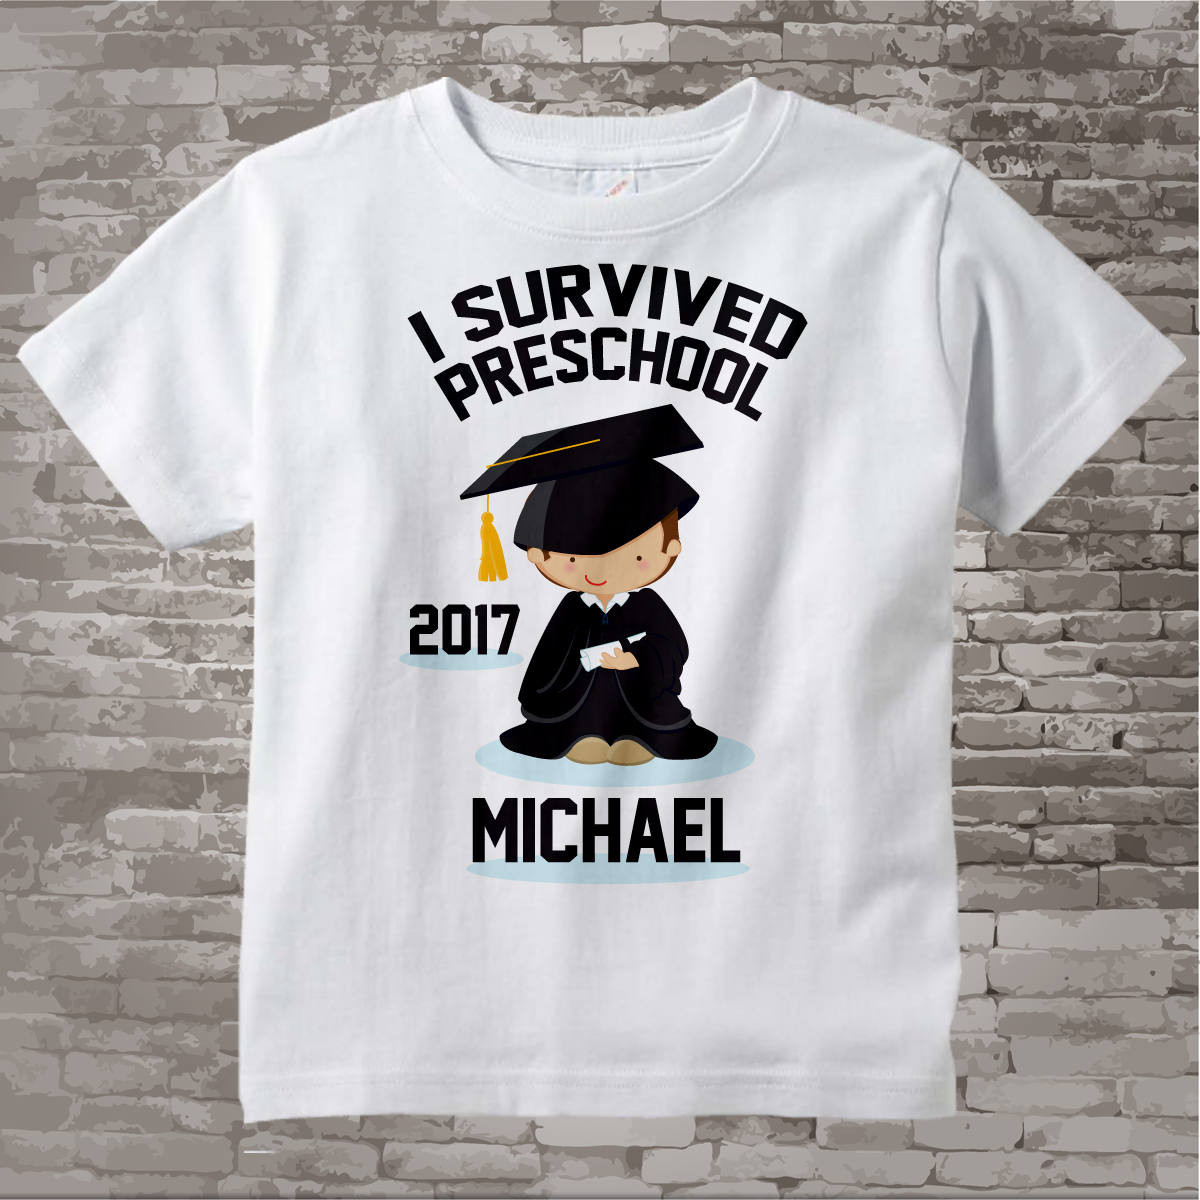 Preschool T Shirt Ideas
 Personalized I Survived Preschool Shirt Preschool Graduate